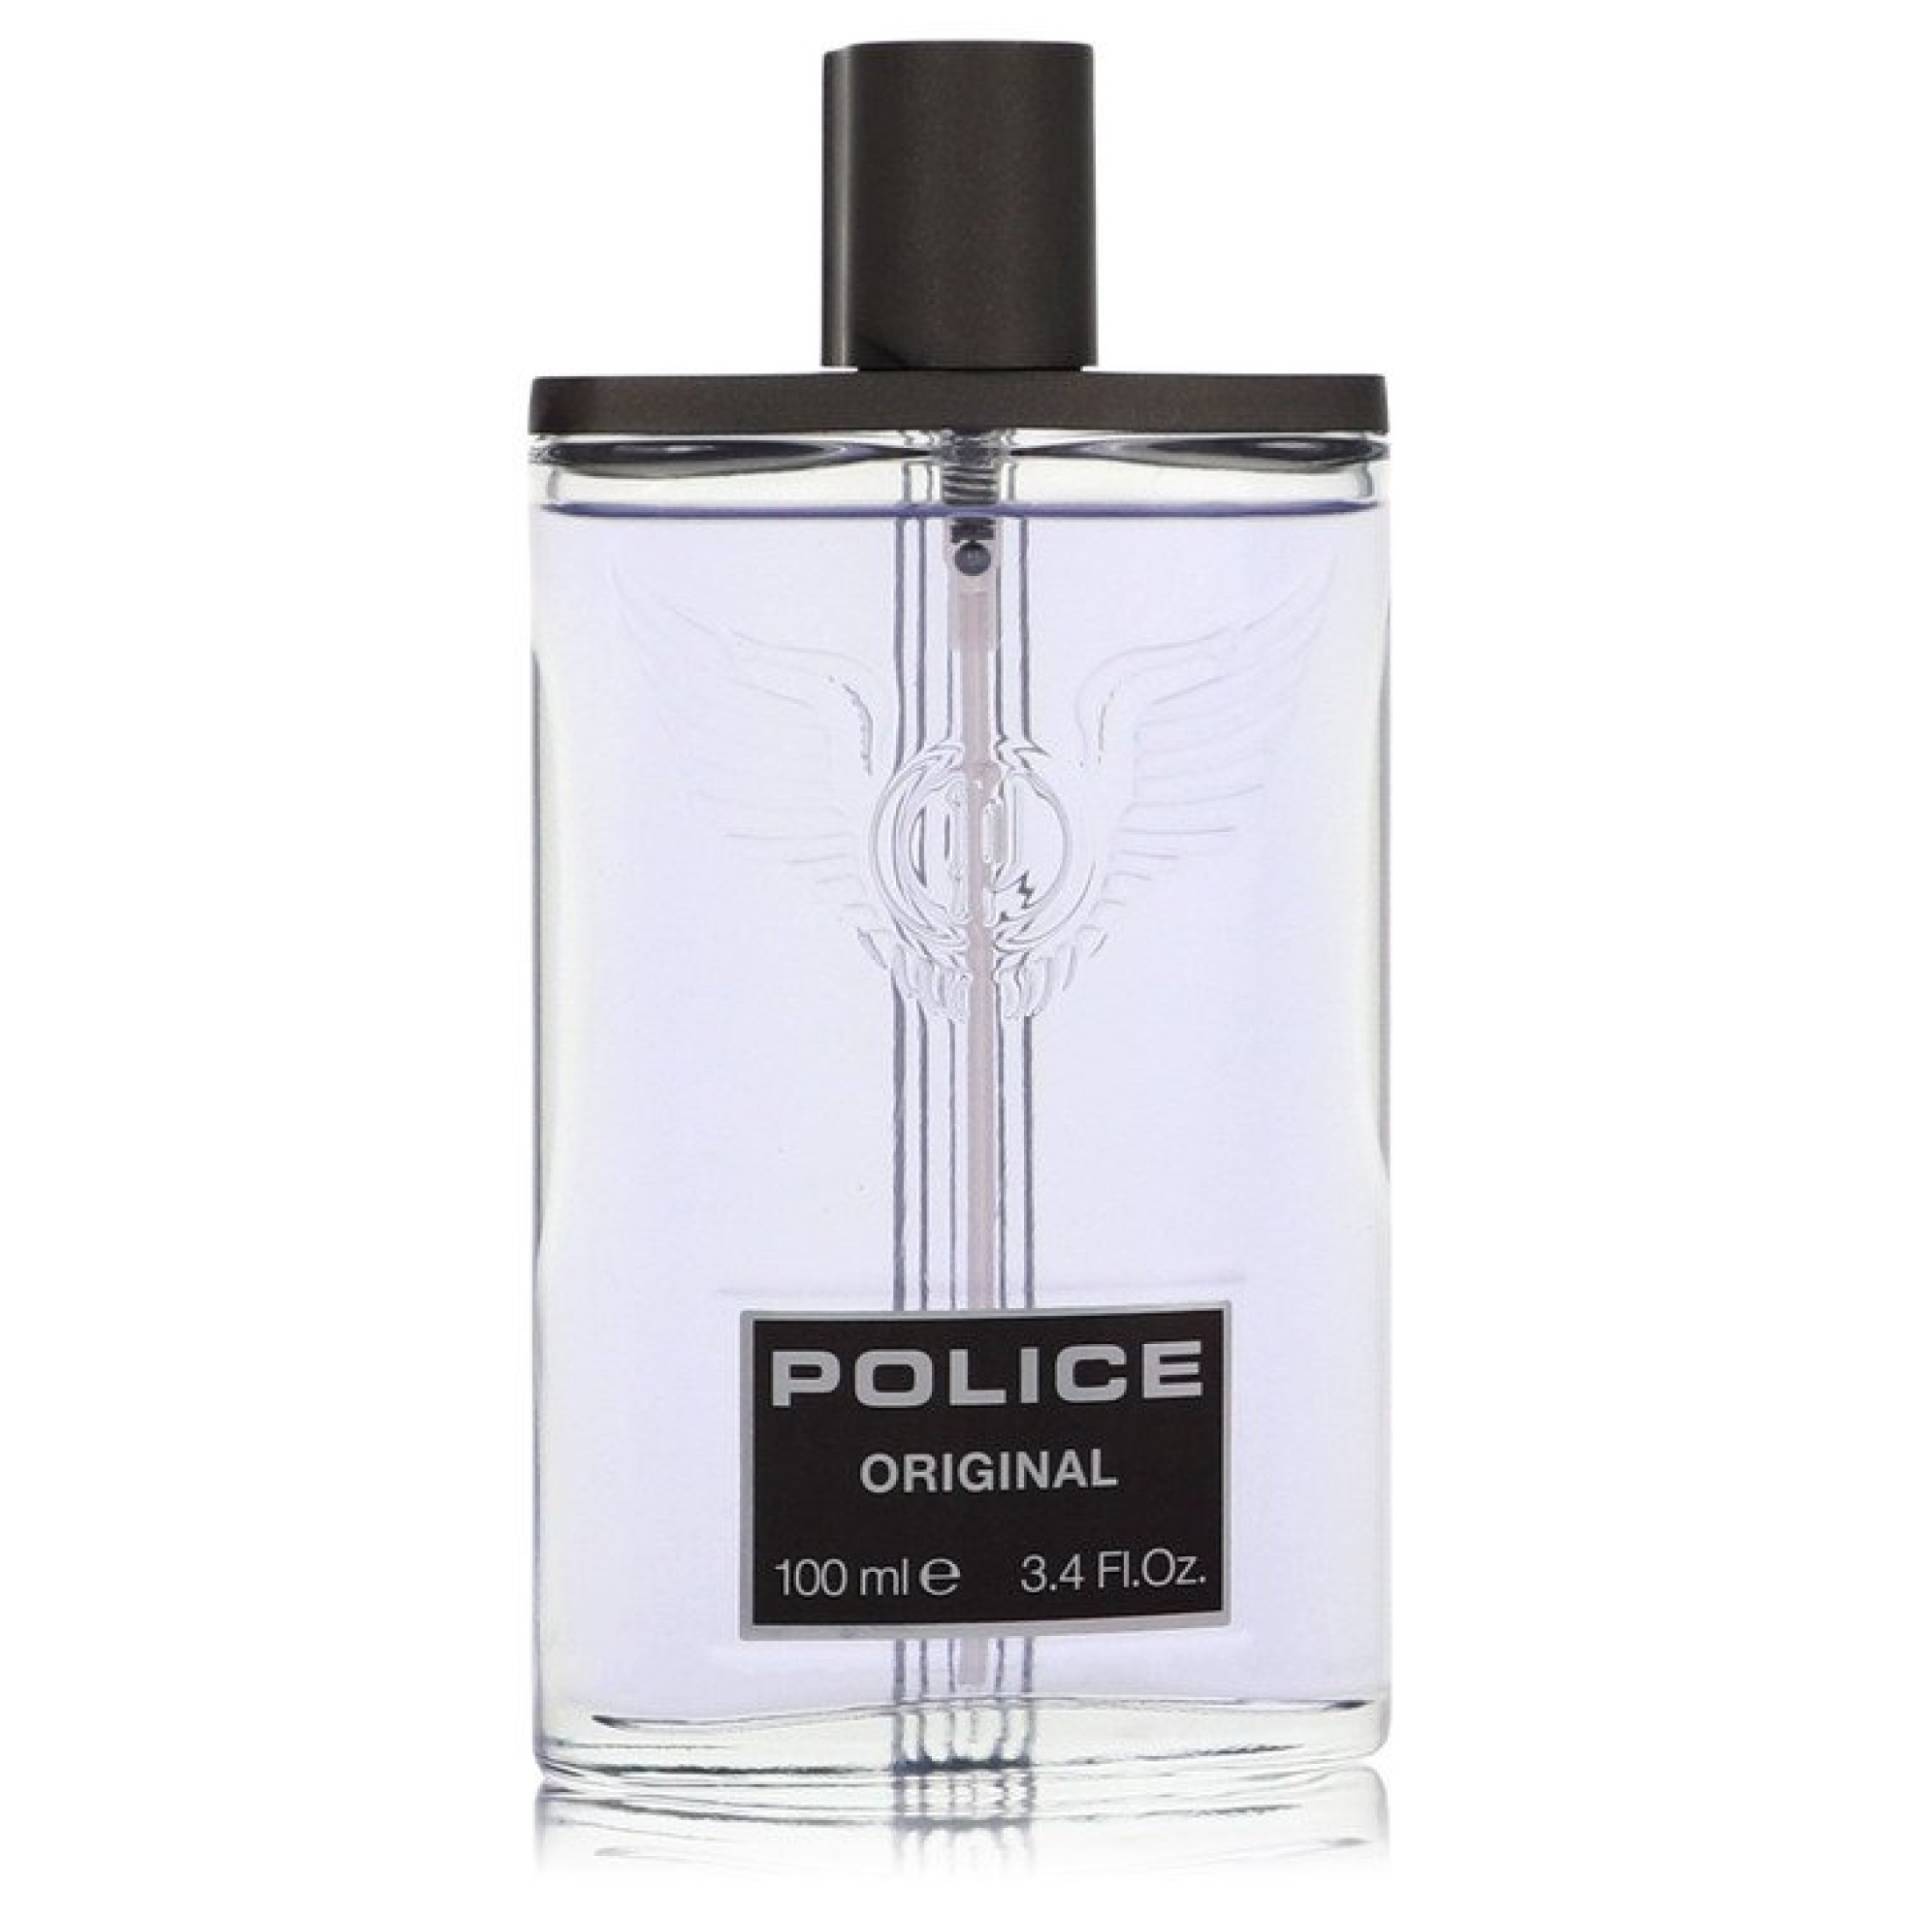 Police Colognes Police Original Eau De Toilette Spray (Tester) 100 ml von Police Colognes